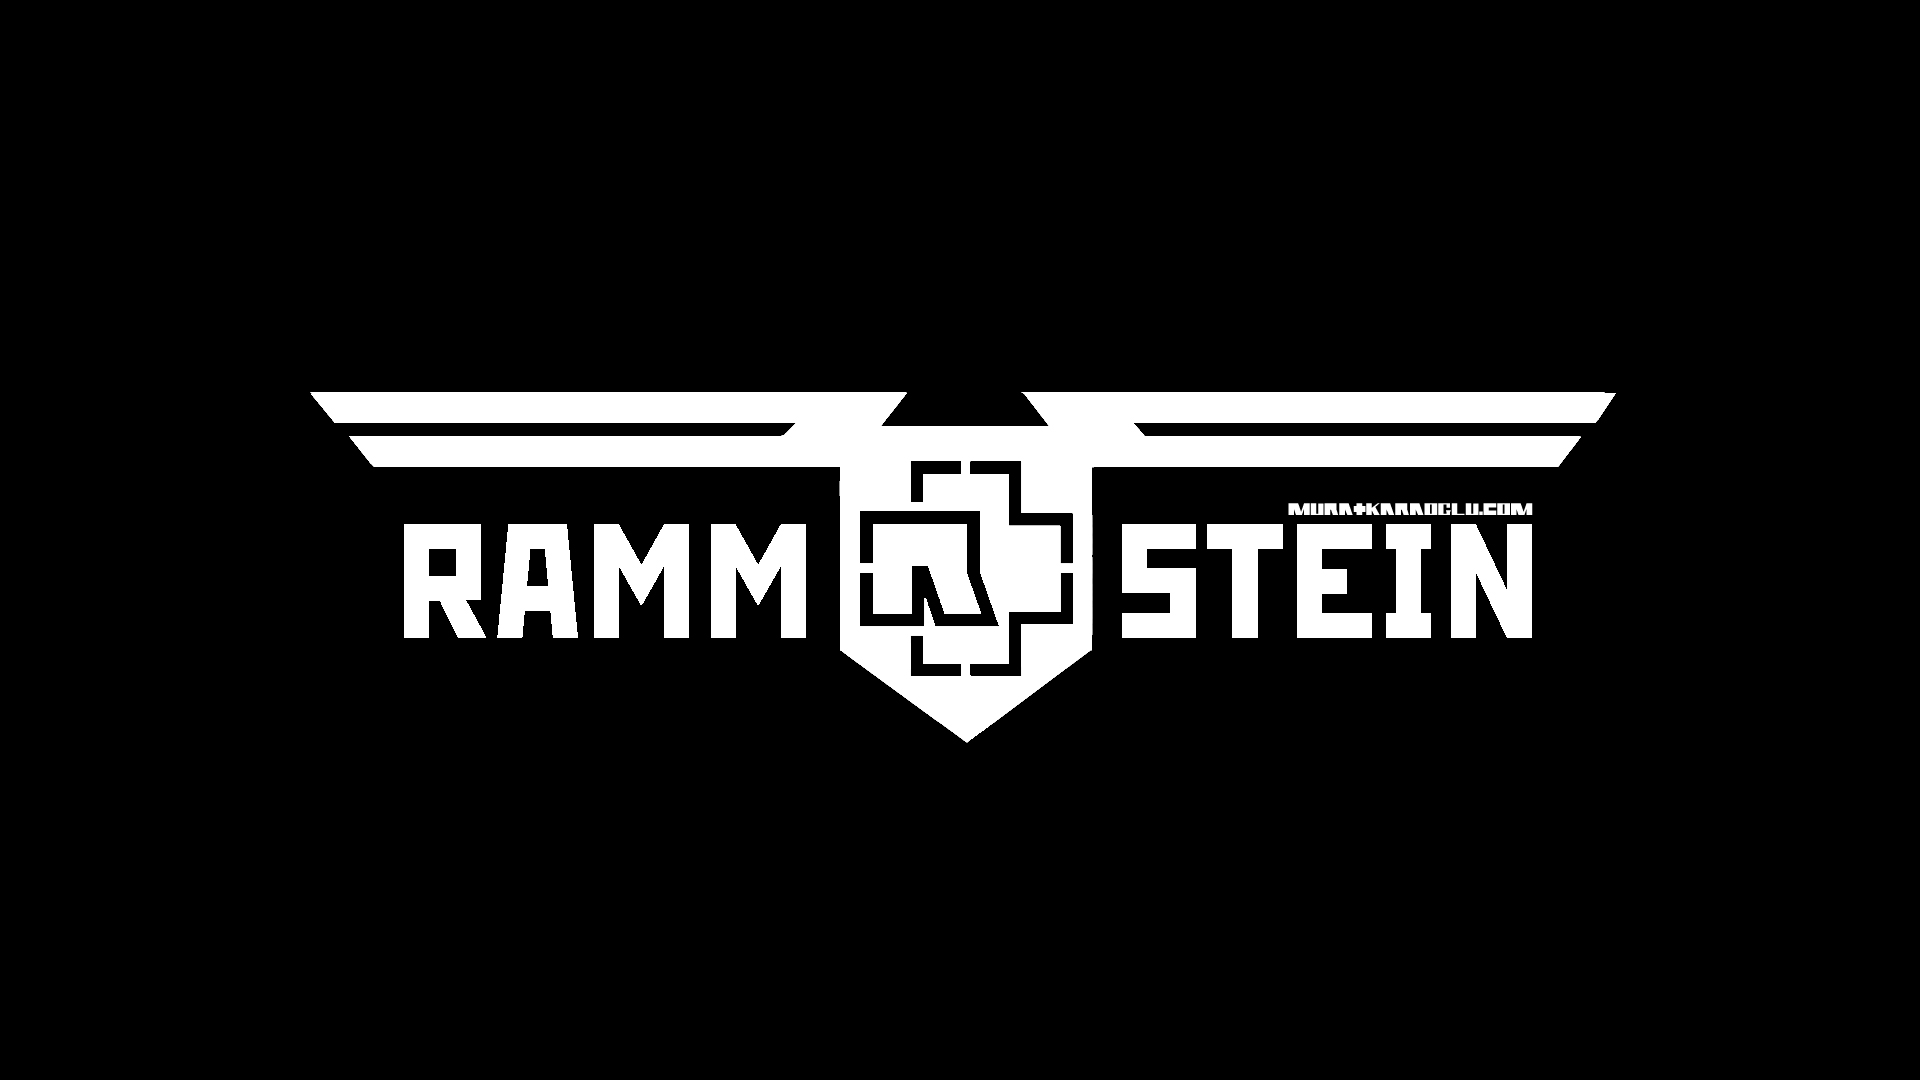 Rammstein Live Image HD Wallpaper Bsnscb Gallery